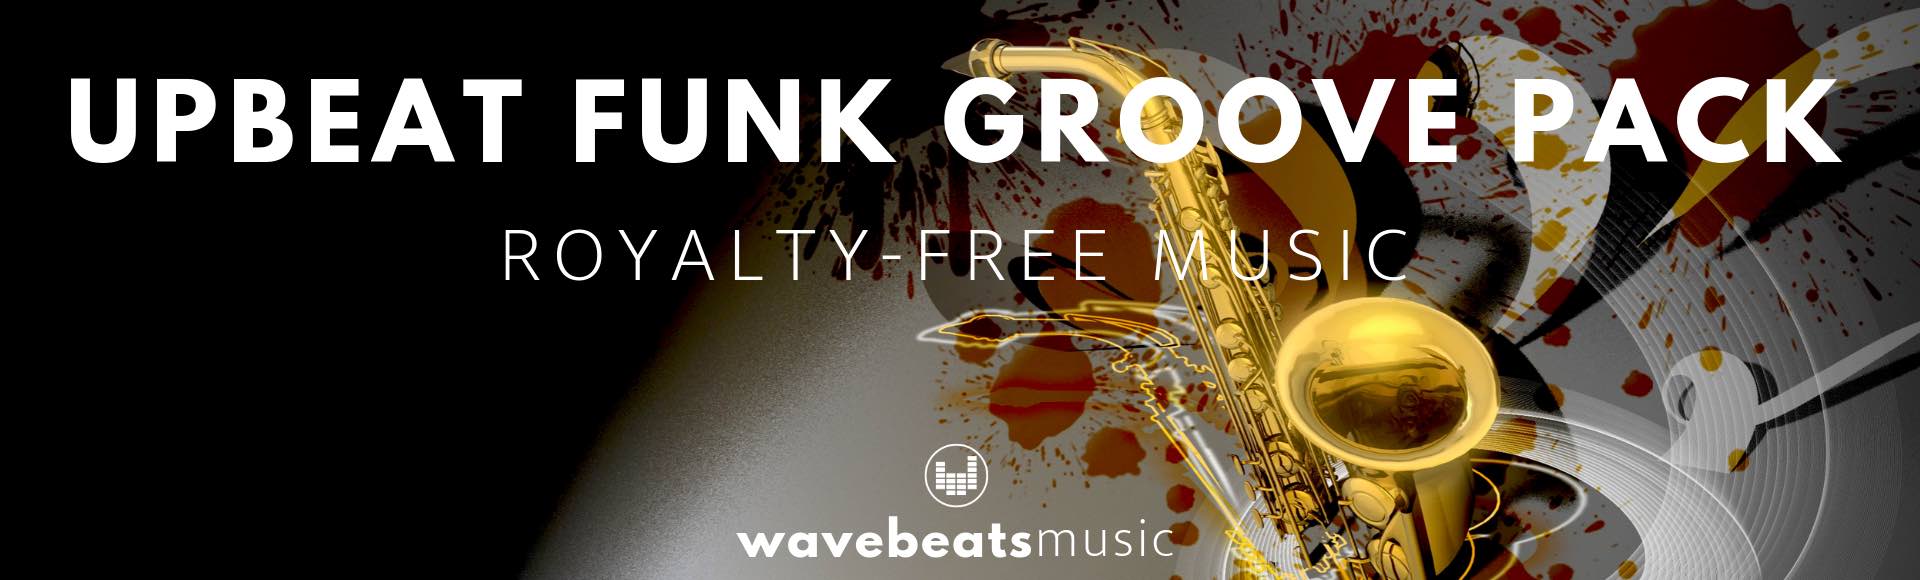 Upbeat & Energetic Funky Groove - 15